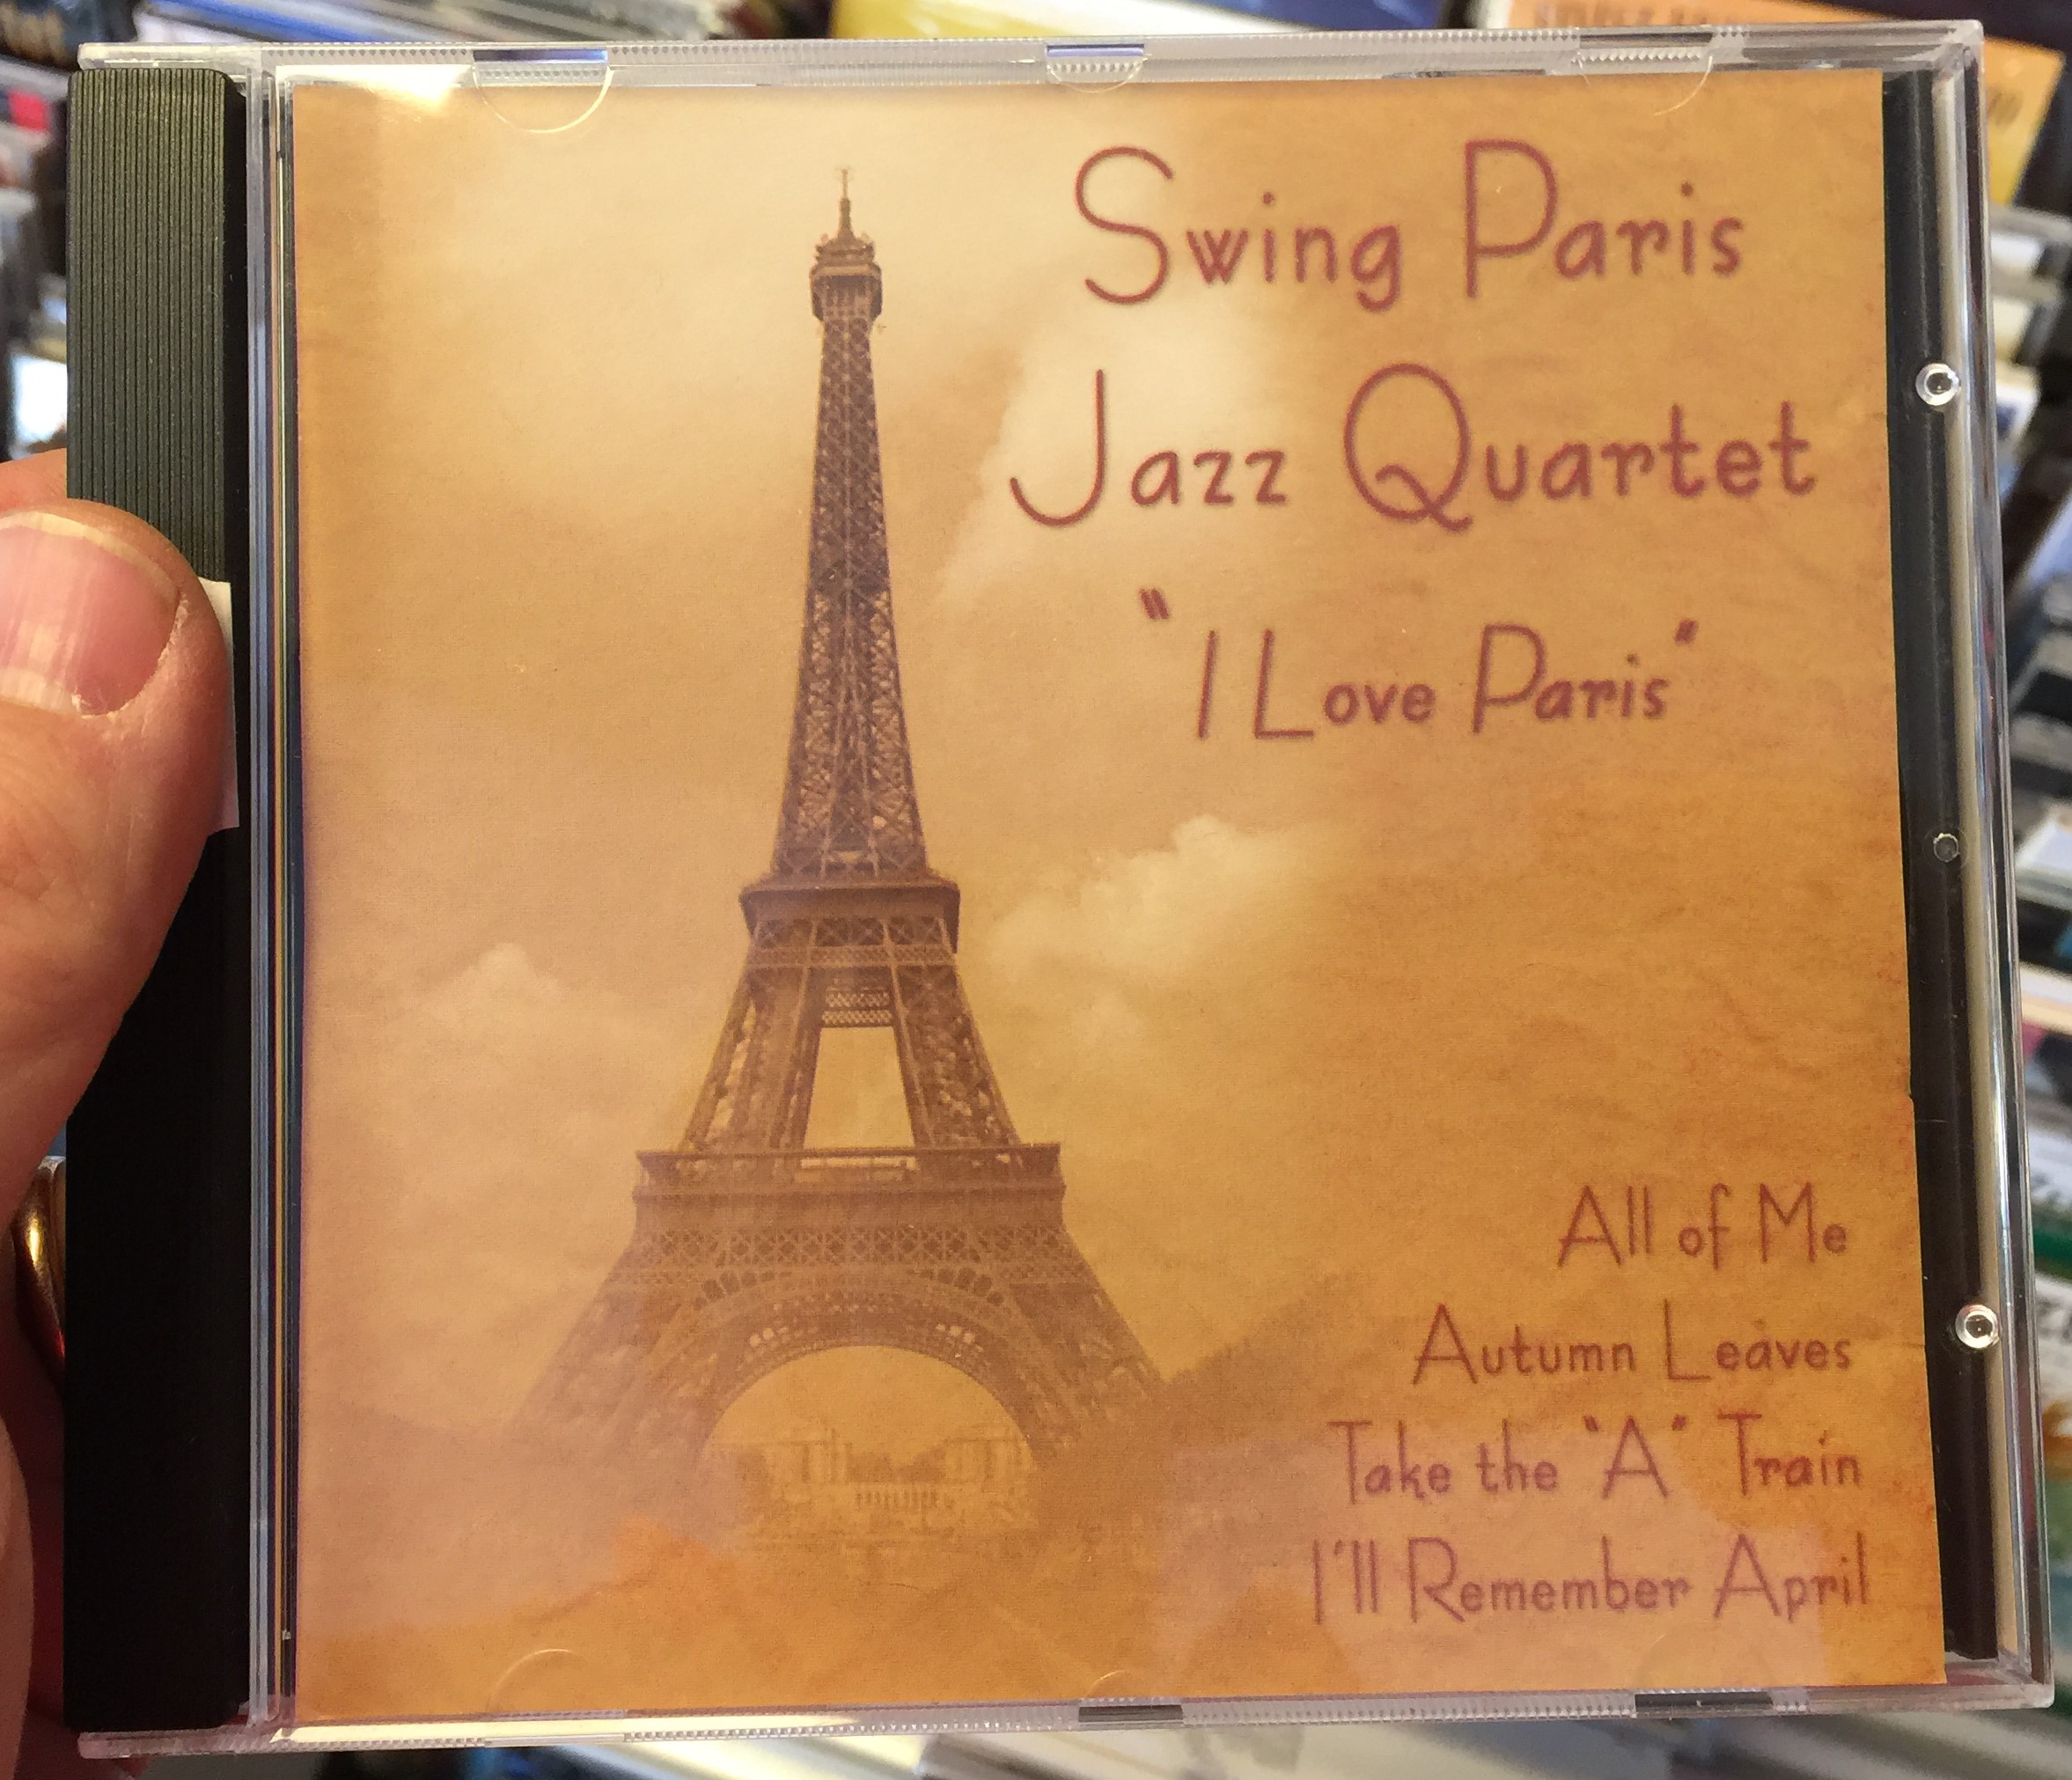 swing-paris-jazz-quartet-i-love-paris-all-of-me-autumn-leaves-take-the-a-train-i-ll-remember-april-h-h-92-kft.-audio-cd-hhk-012-1-.jpg